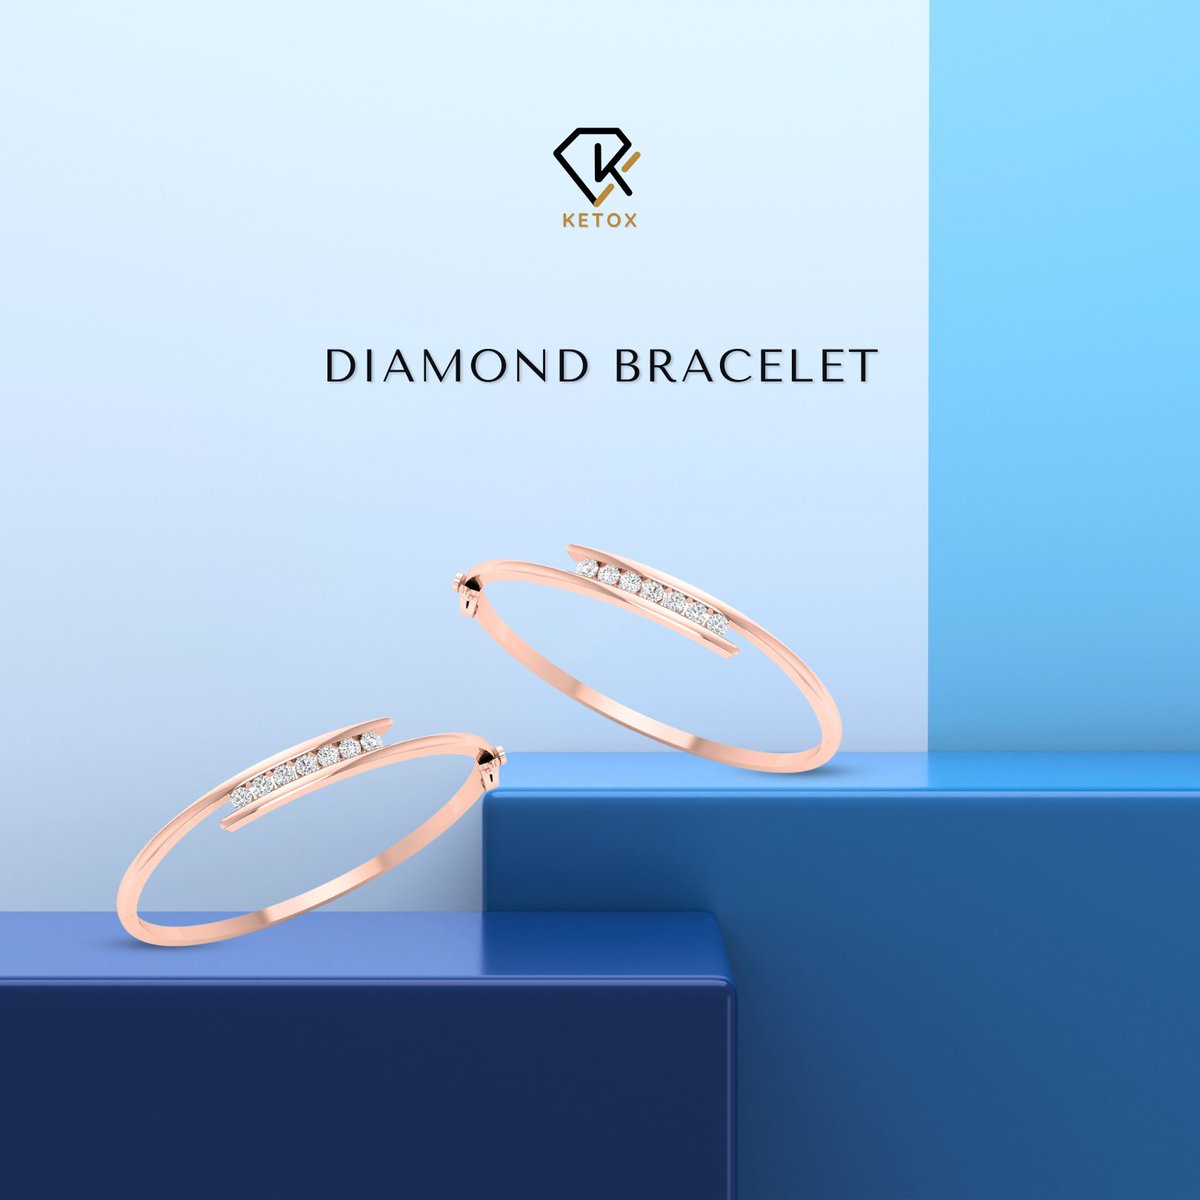 Shine Bright 💎 Elevate Your Style with This Exquisite Diamond Bracelet! 💫

#DiamondDreams #SparklingElegance #JewelAdornments #LuxuryLifestyle #GlamourGleam #Wristwear #ChicDiamonds #StatementJewelry #Rosegold #Gold #Ketoxjewellery